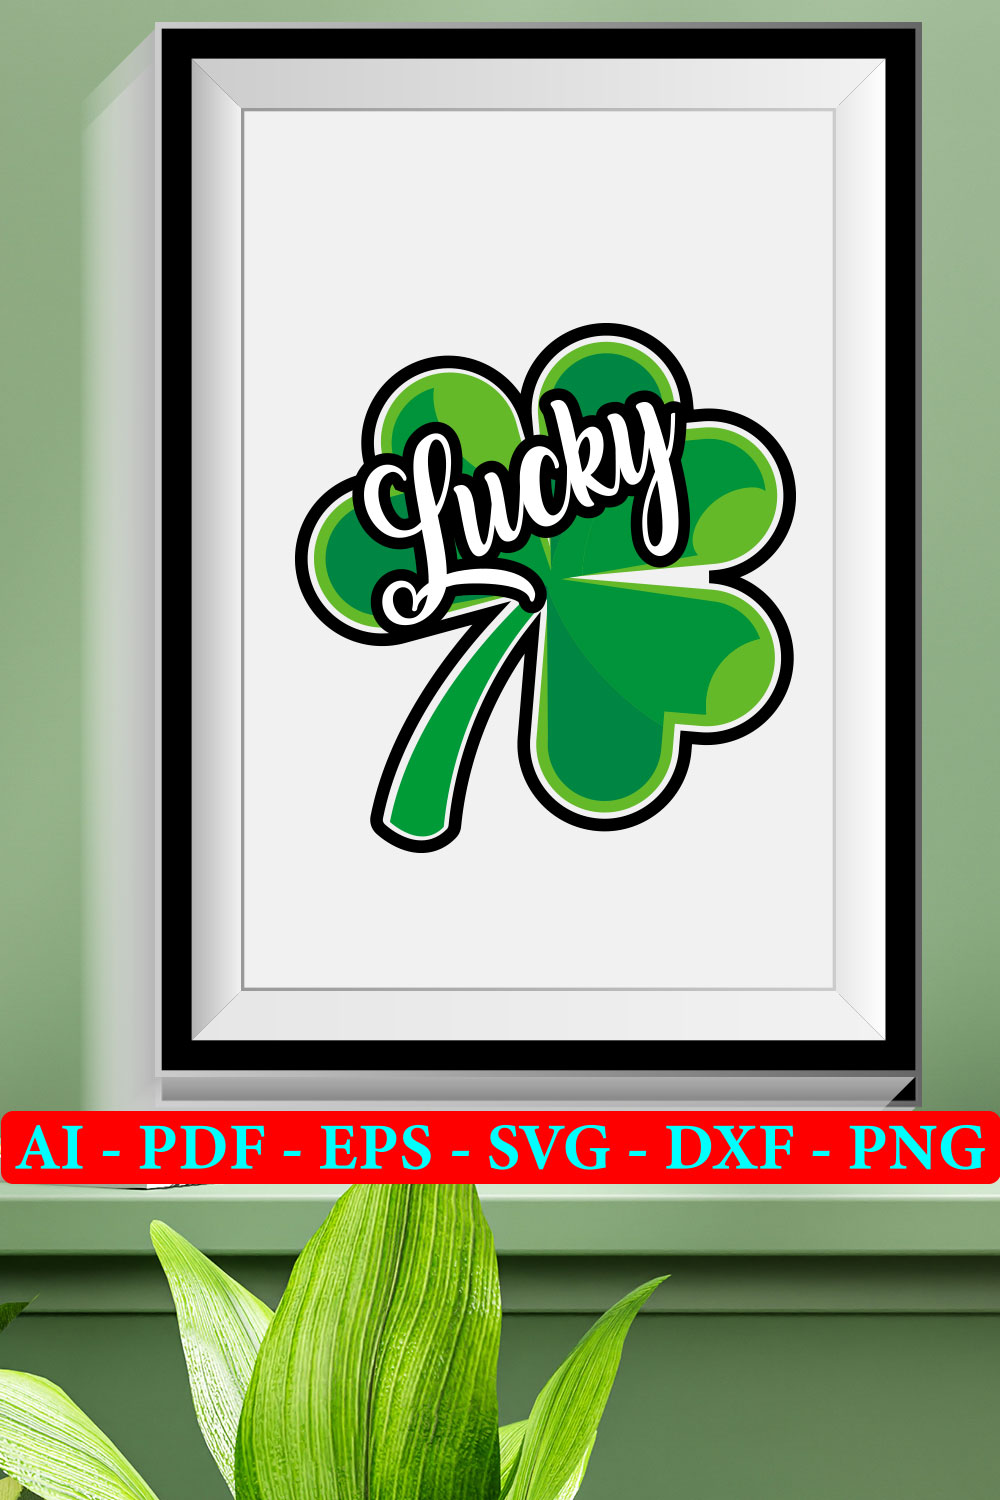 6 St Patrick’s Day SVG Bundle Vol 06 pinterest preview image.